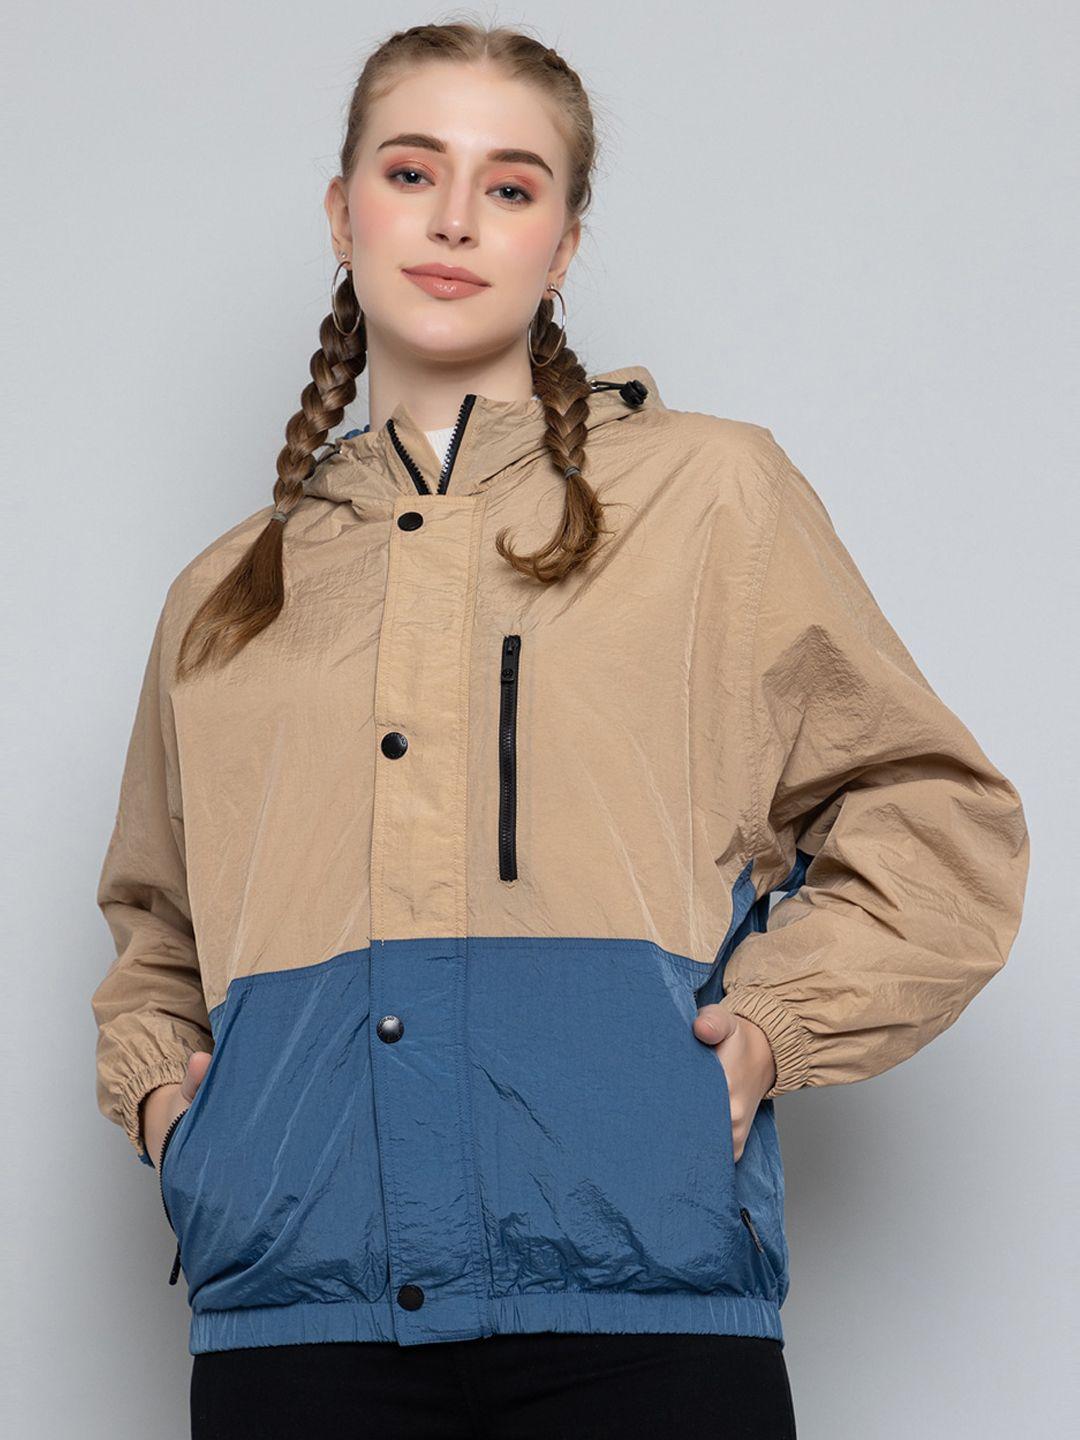 chkokko colourblocked windcheater dry fit hooded sporty jacket